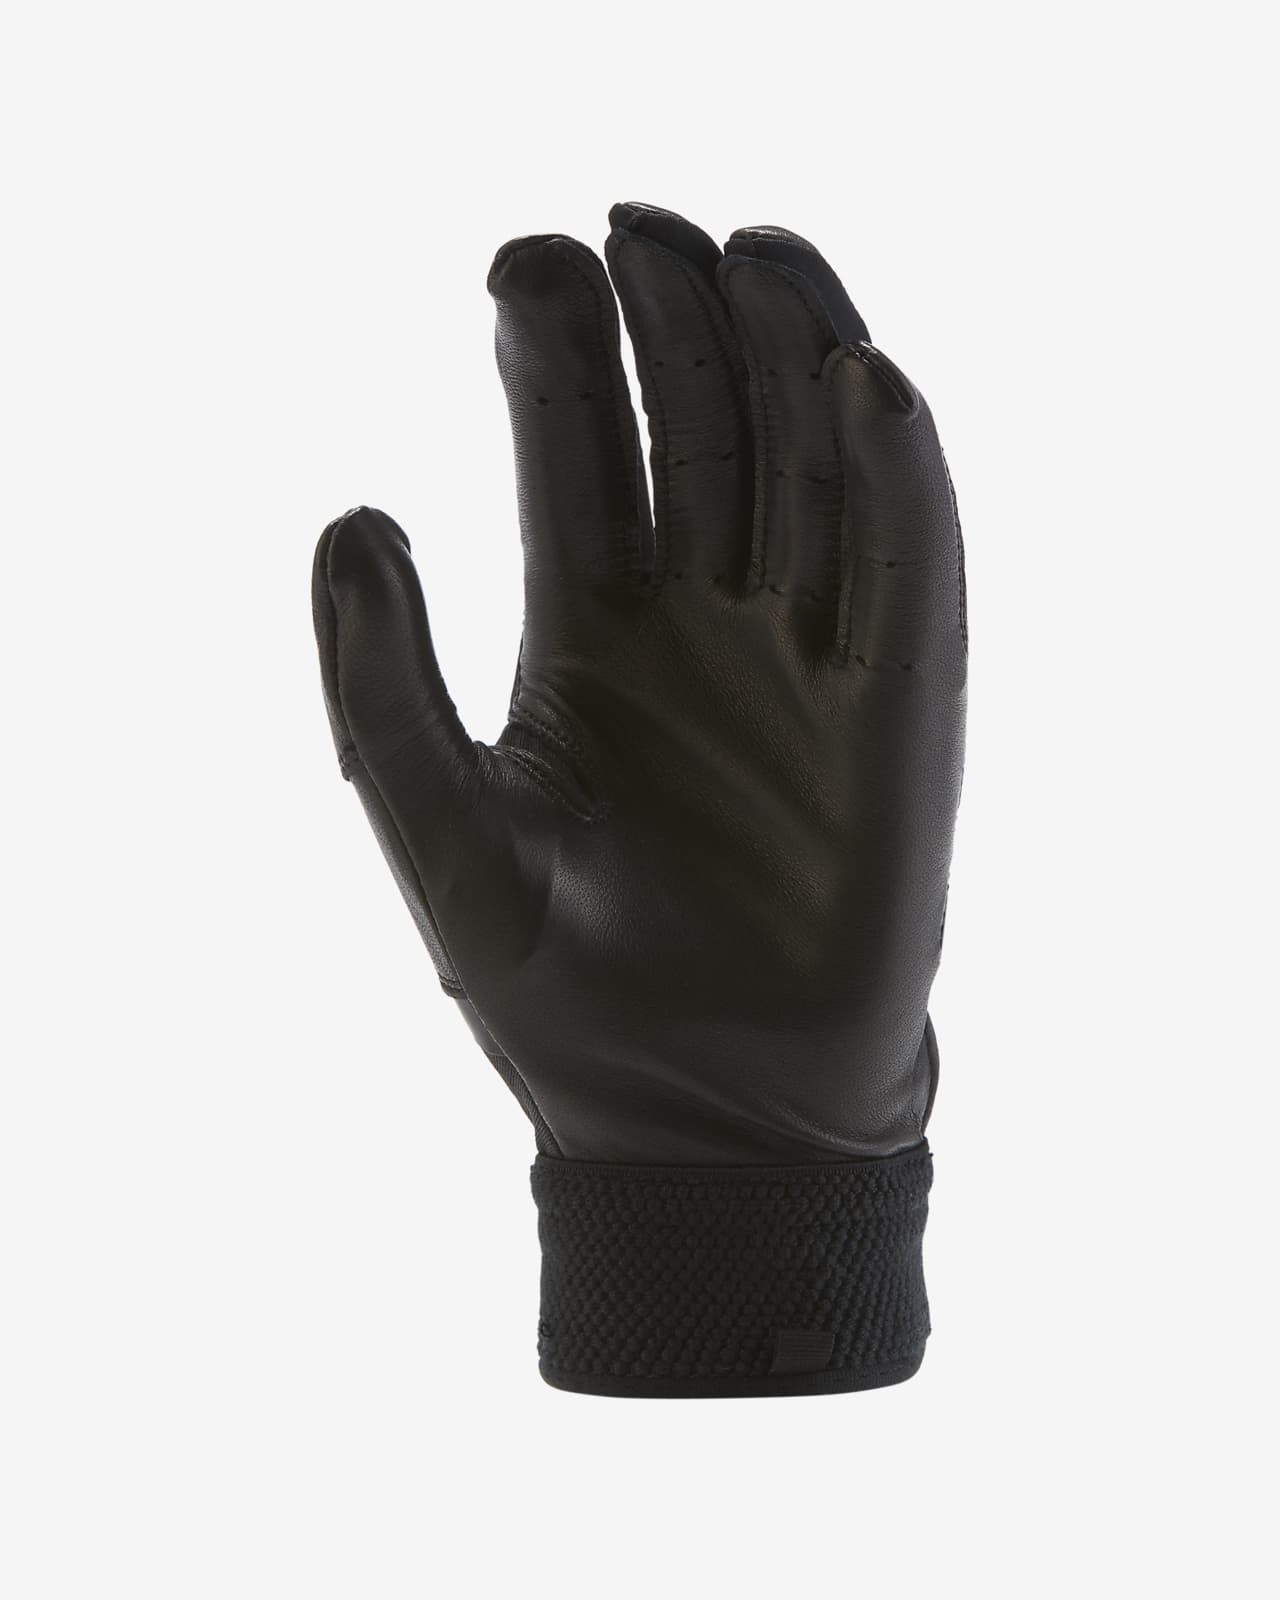 nike huarache gloves review